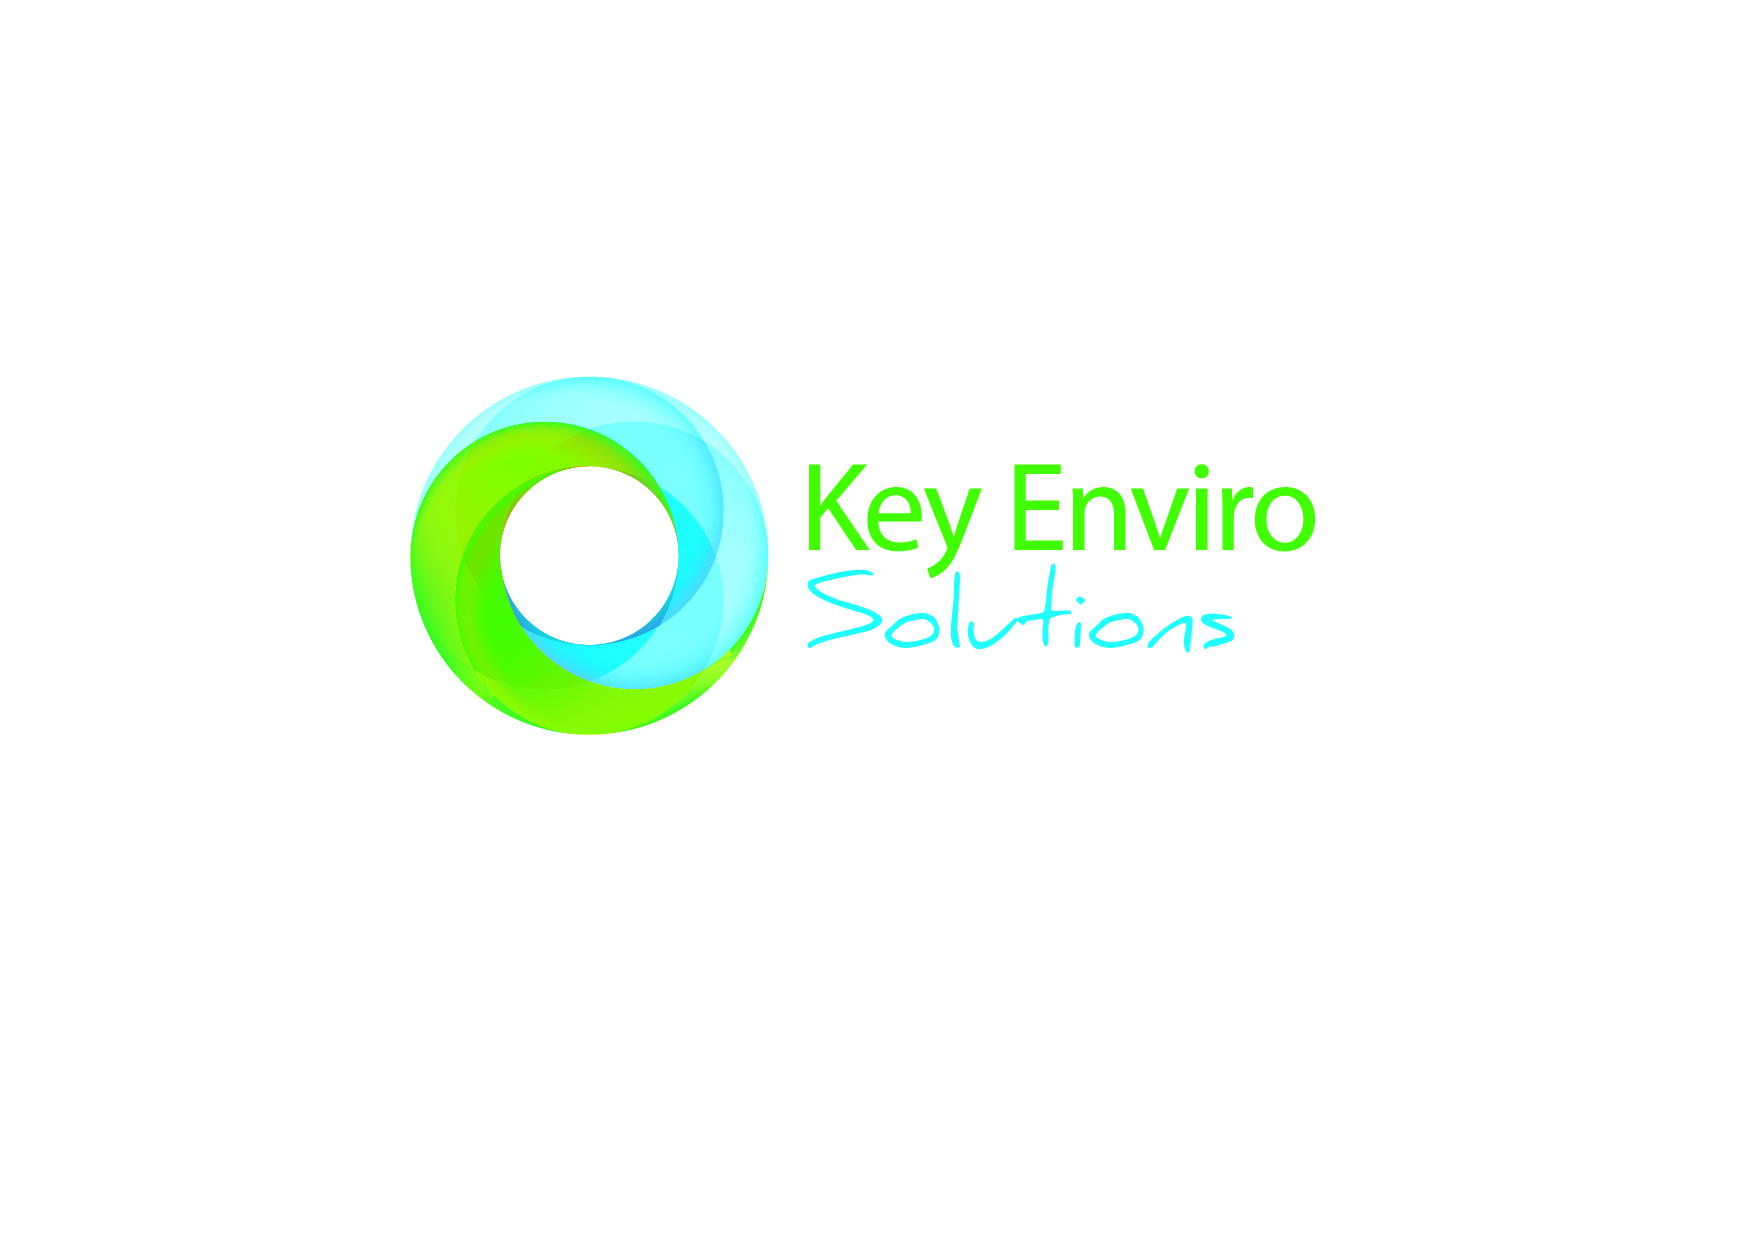 Launch of Key Enviro Solutions new website